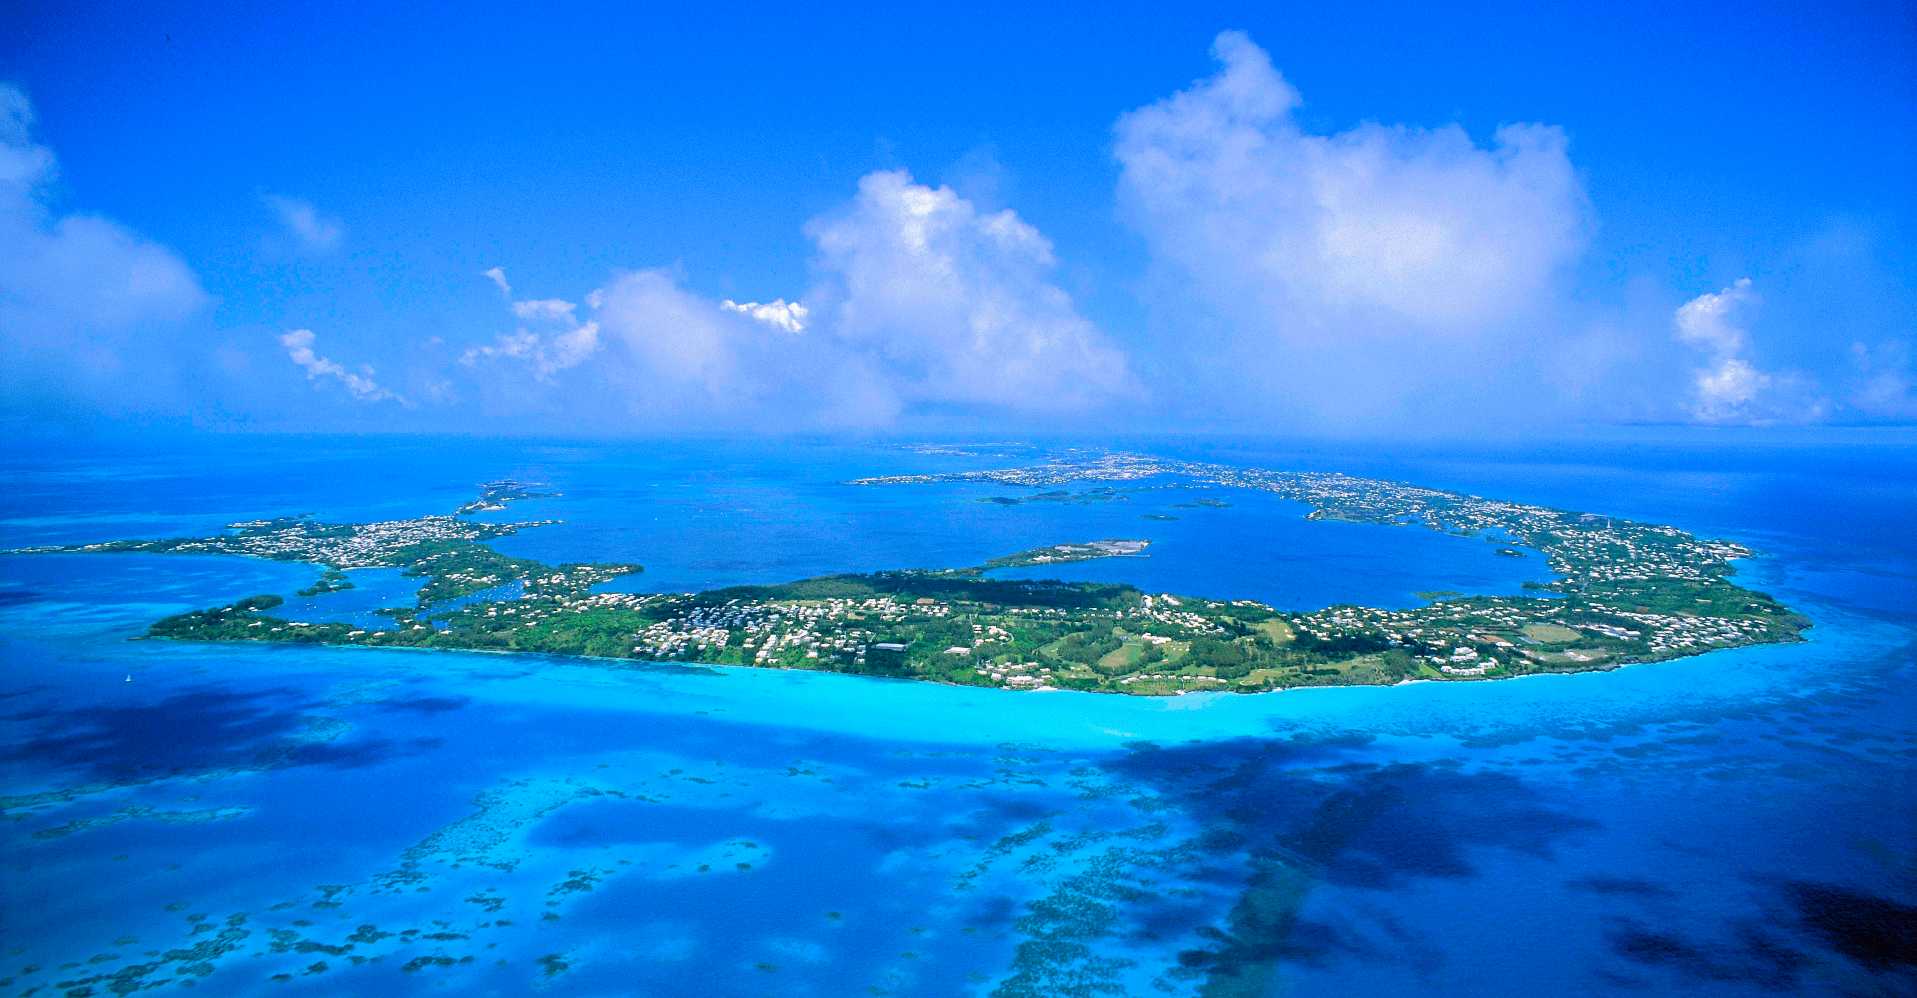 Bermuda cruise passenger count fell 98 in 2020 Seatrade Cruise News